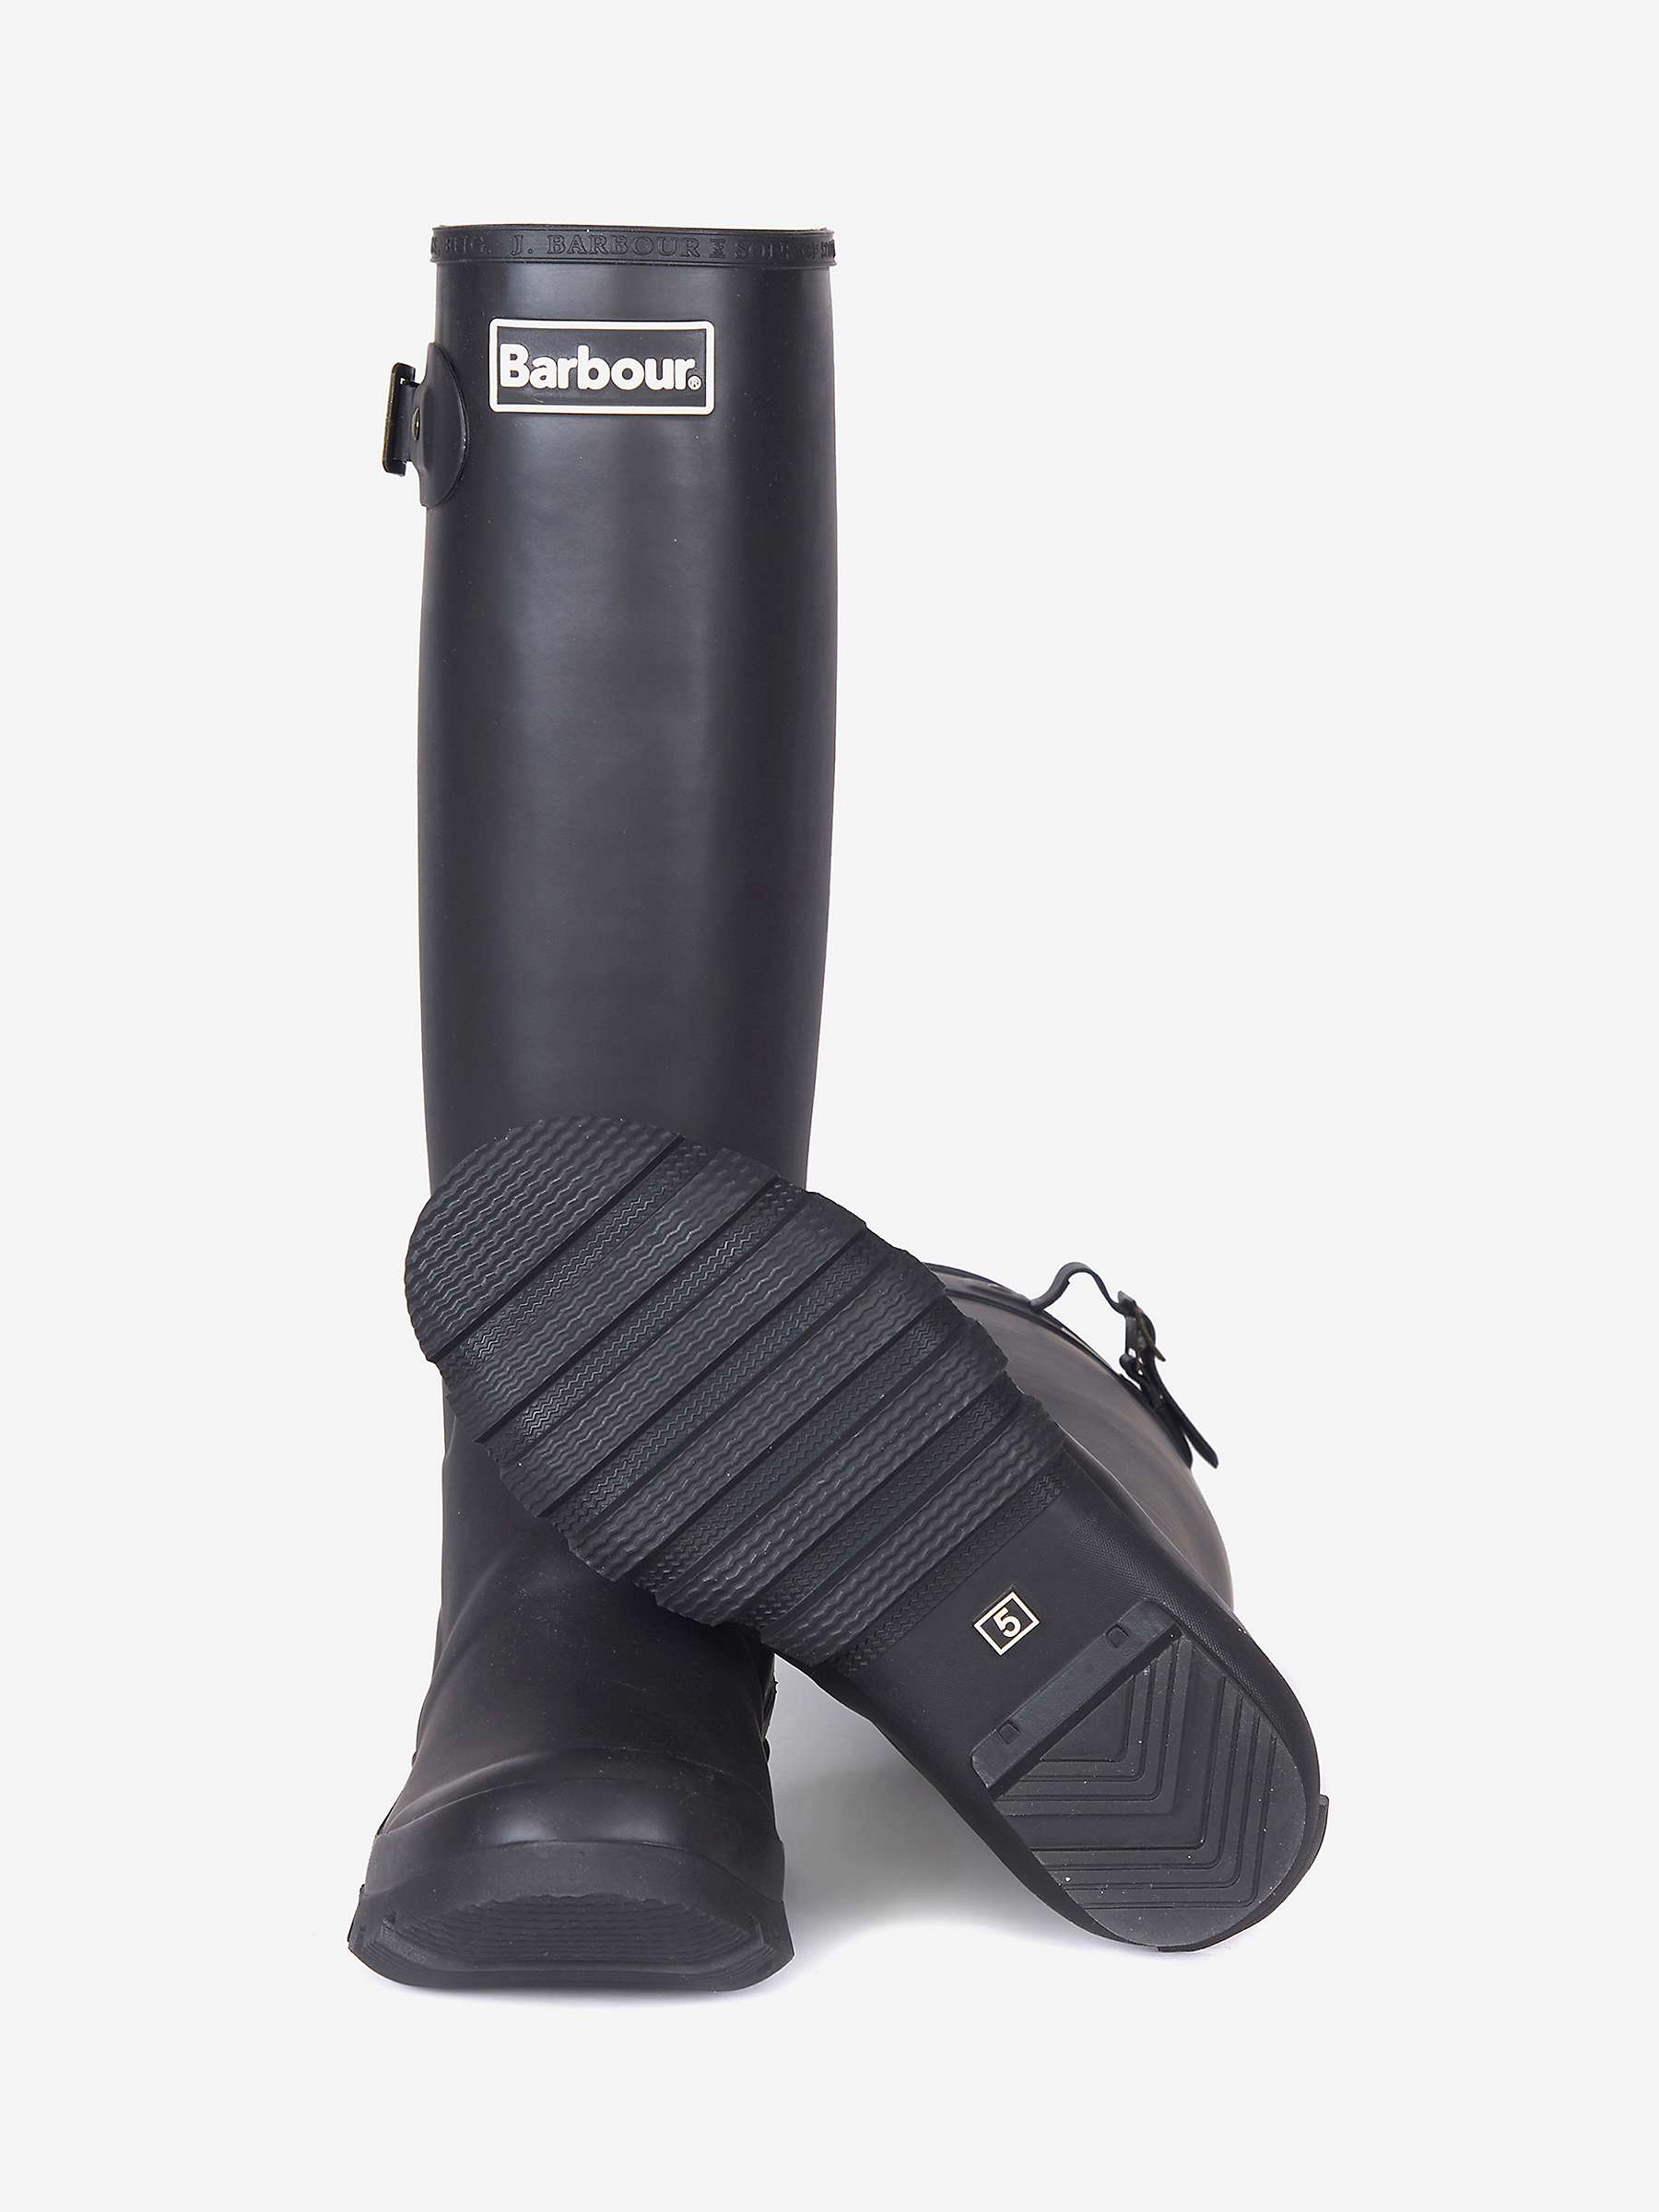 Buy Barbour Bede Wellington Boots Online at johnlewis.com